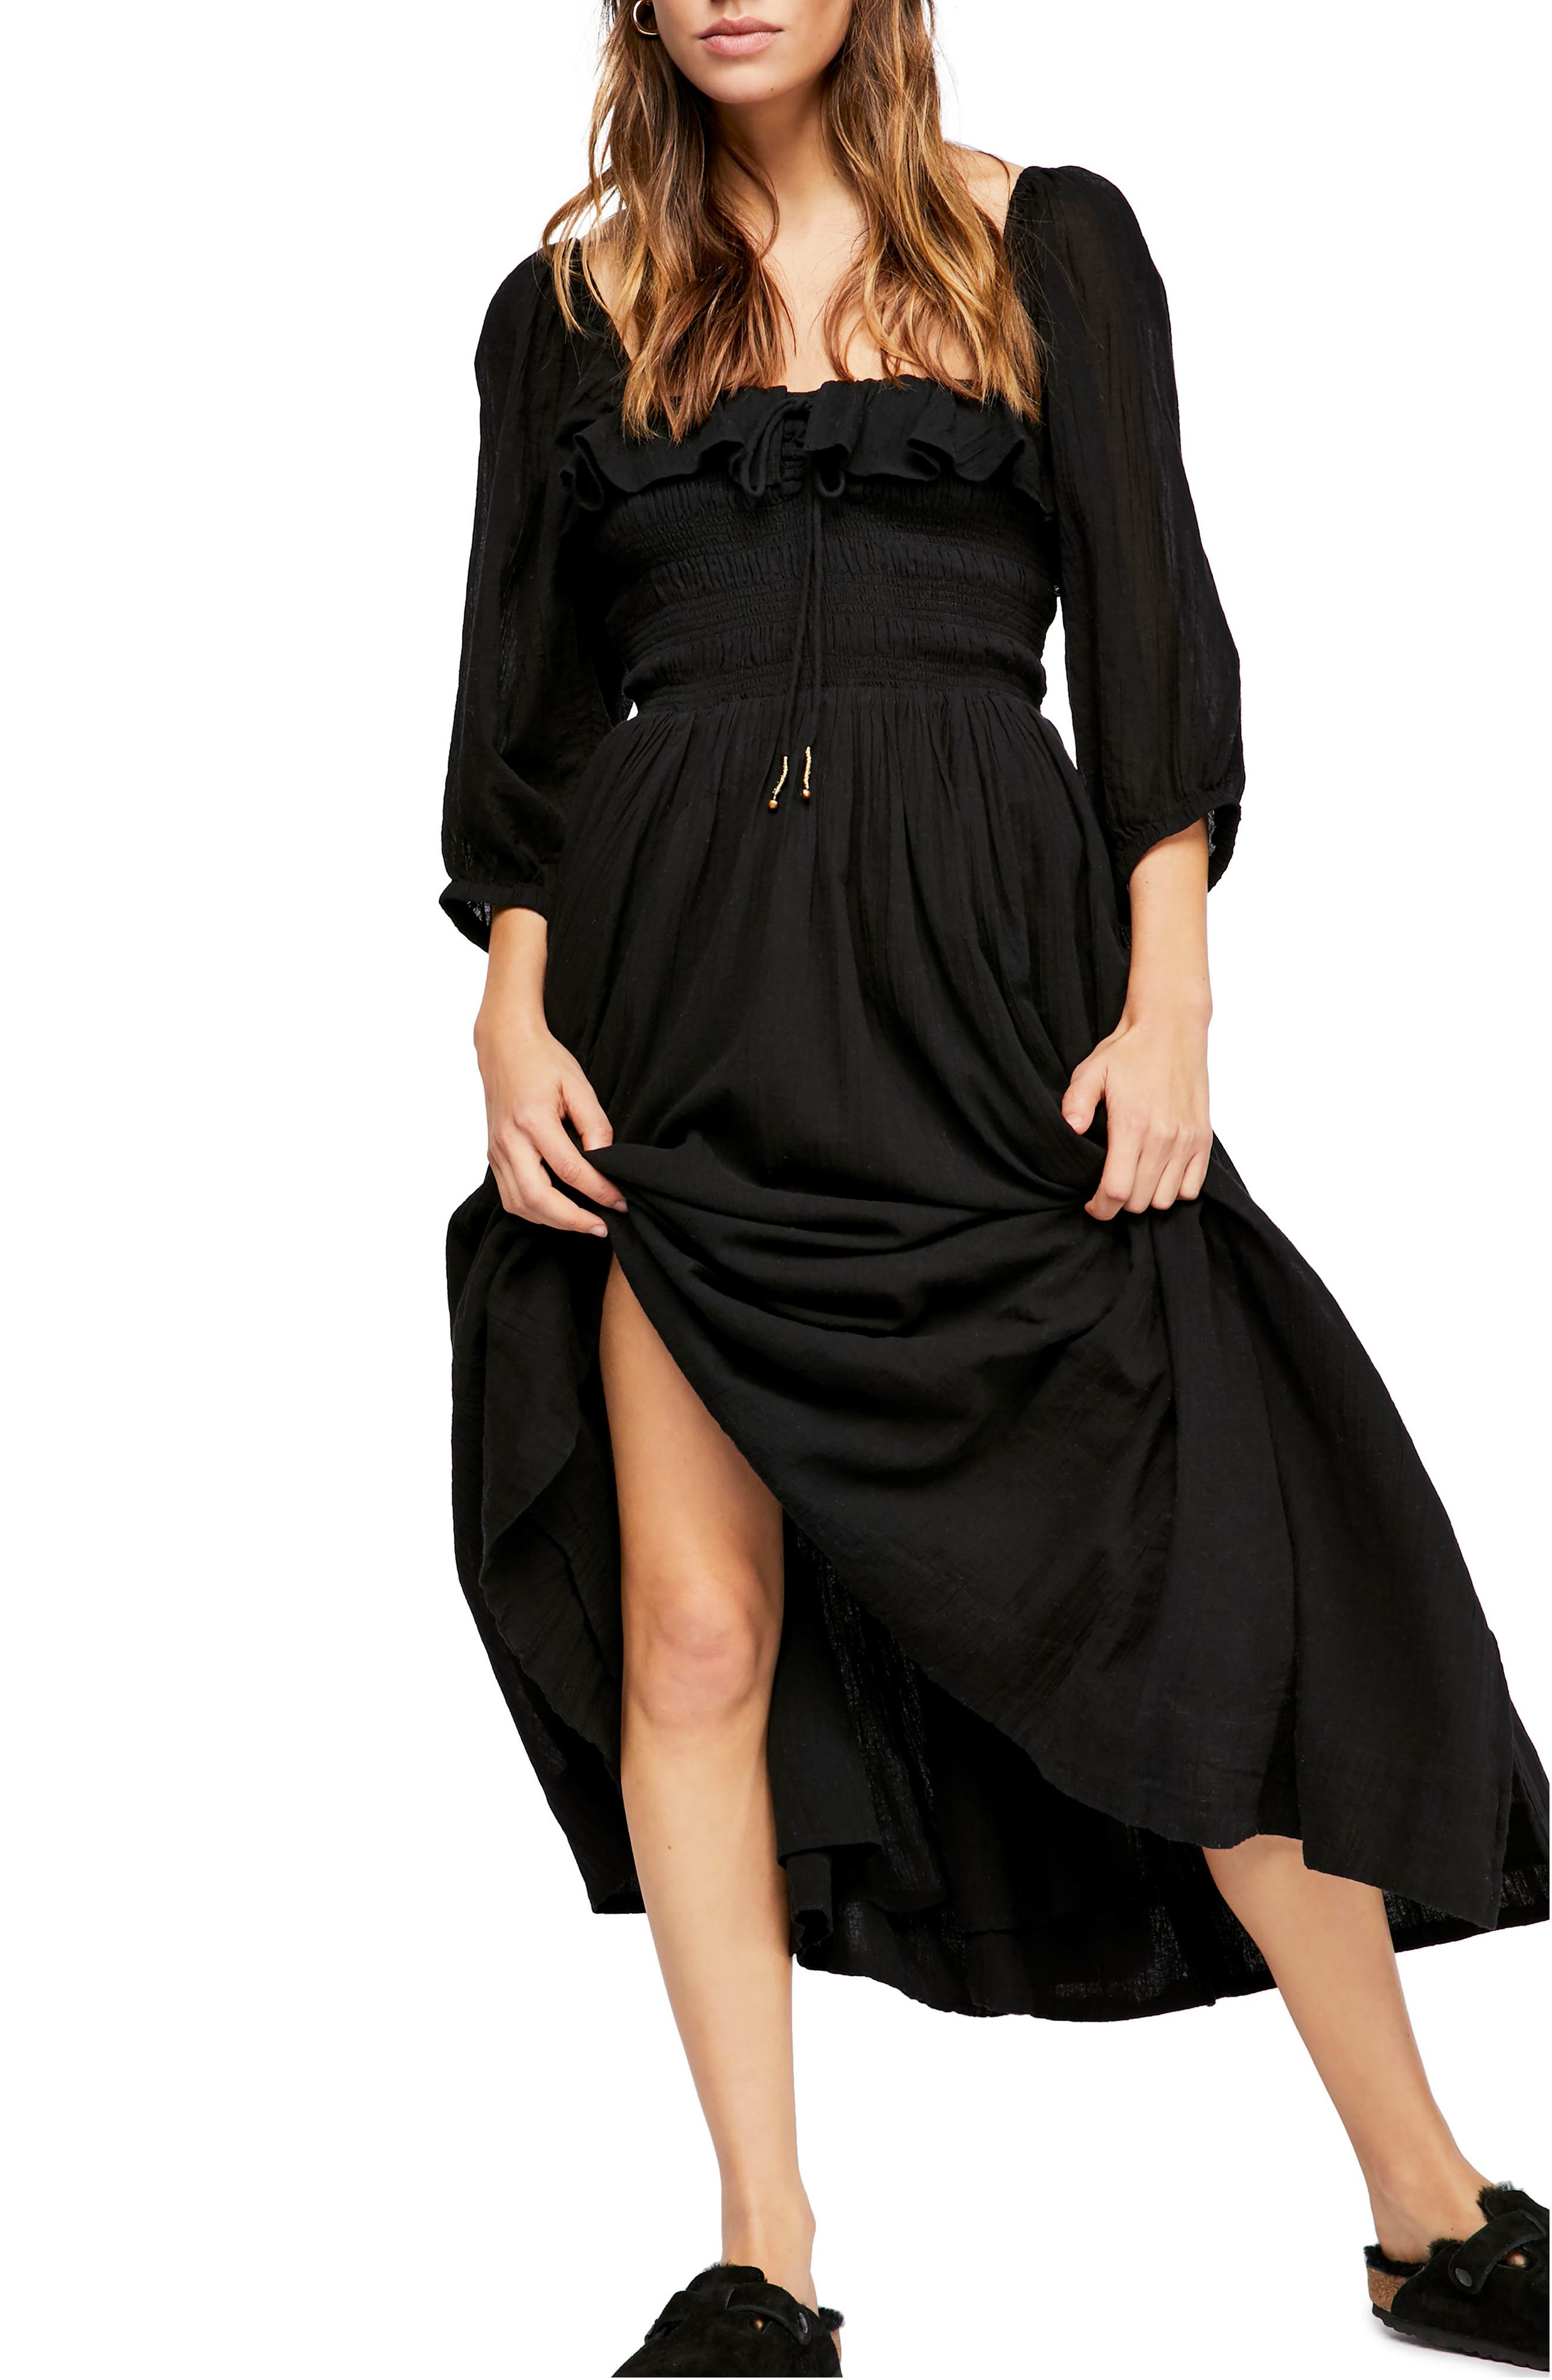 michael kors black dress with studs